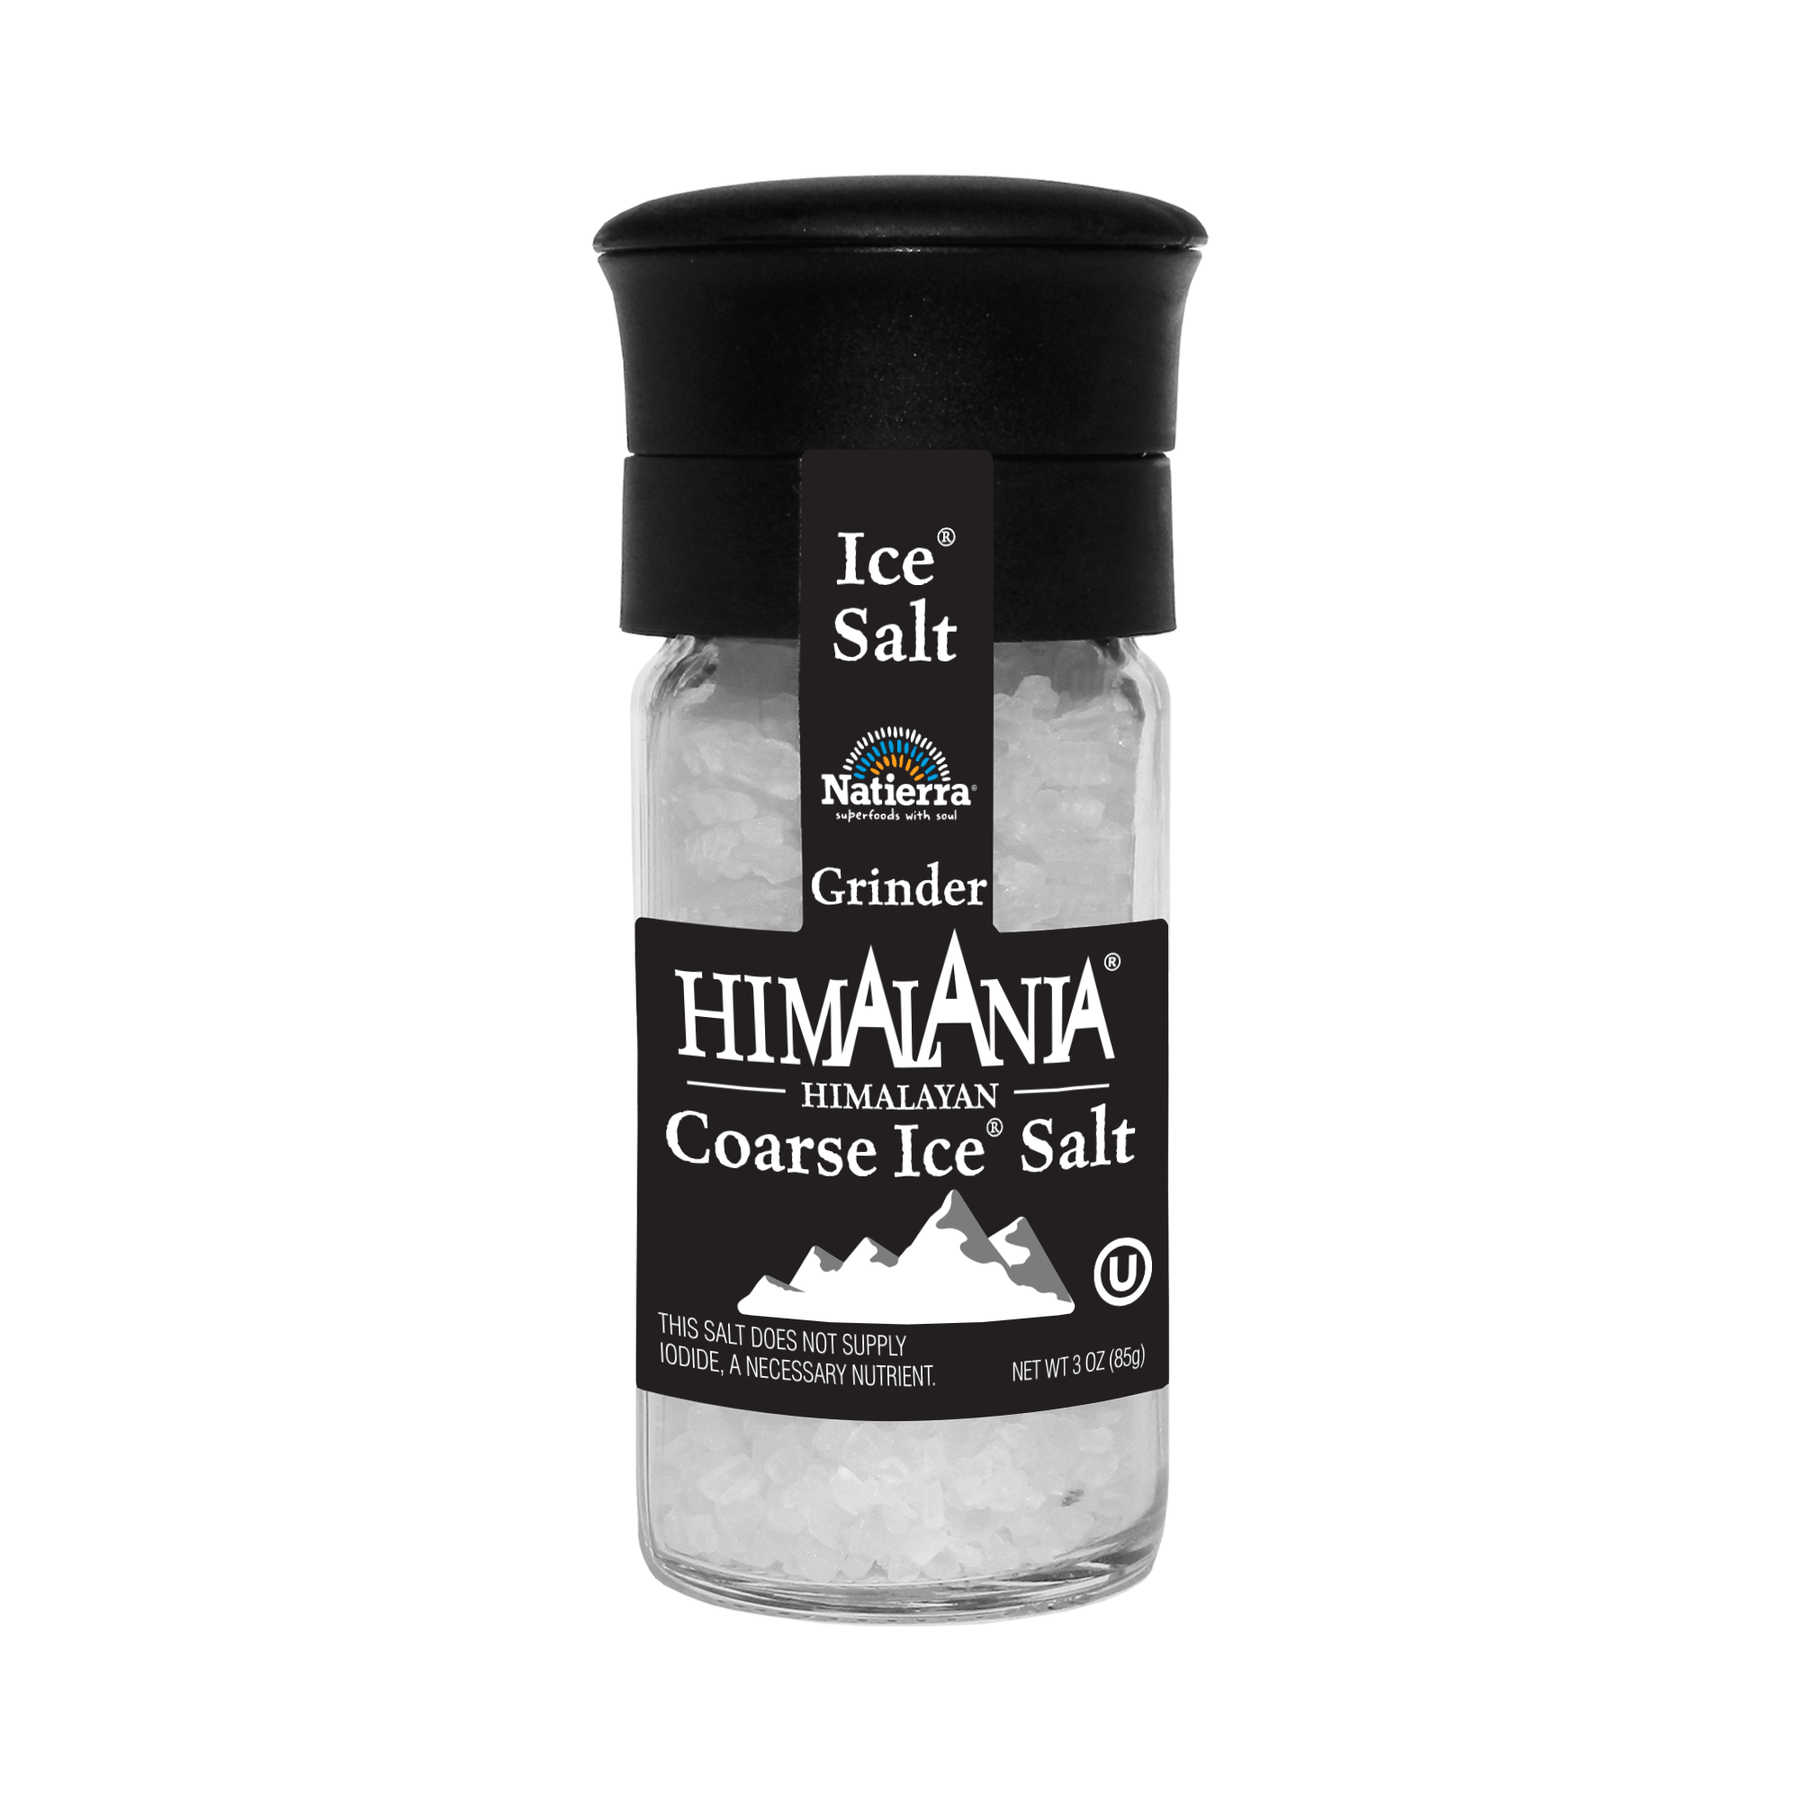 Natierra Himalania Coarse Ice Salt 3 oz grinder